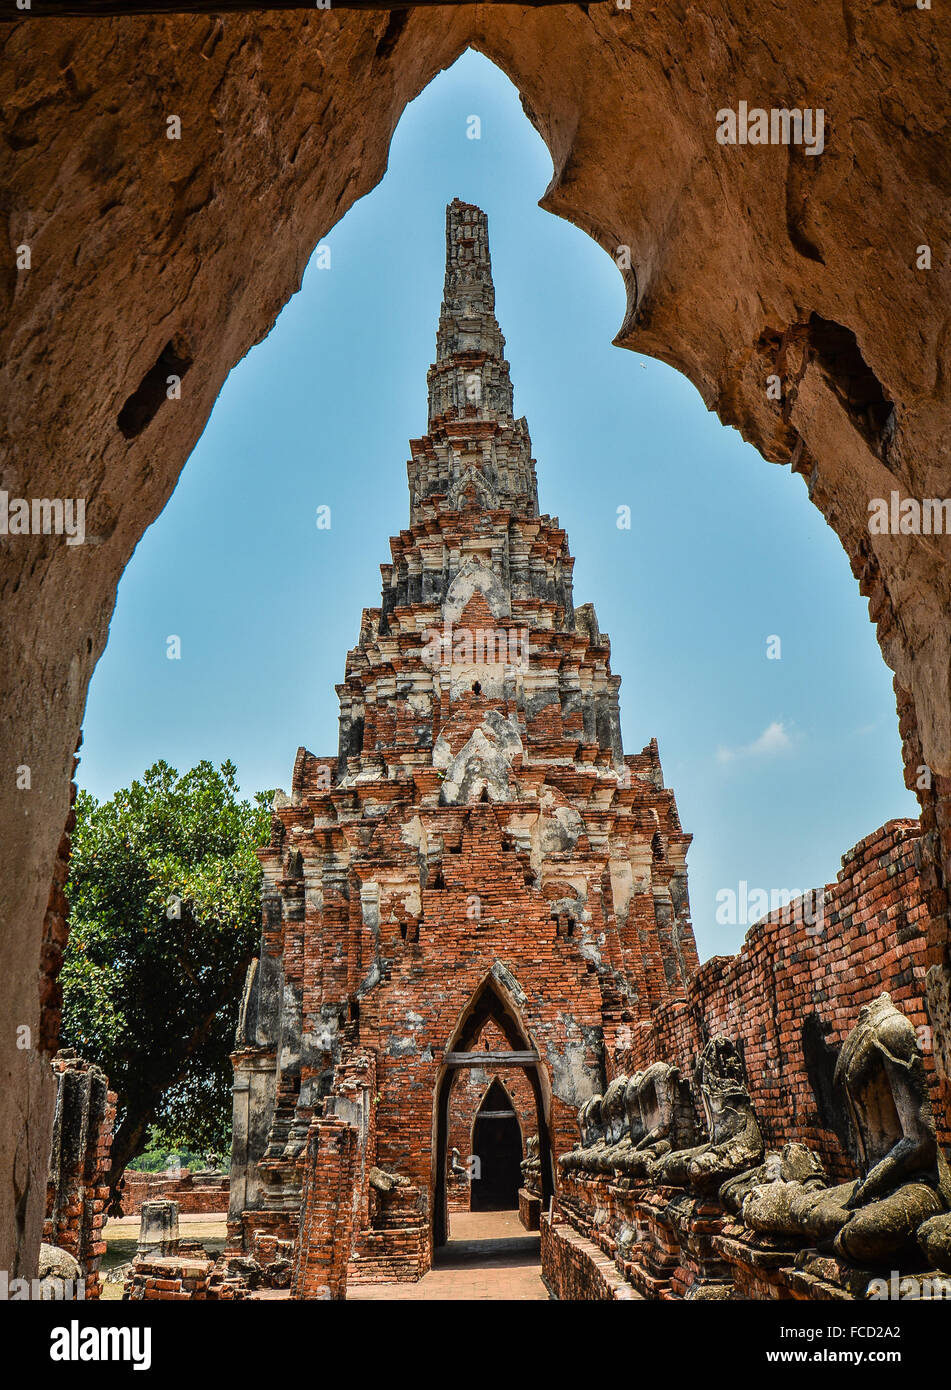 Chedi in Wat Chaiwatthanaram - Ayutthaya, Thailand Stock Photo